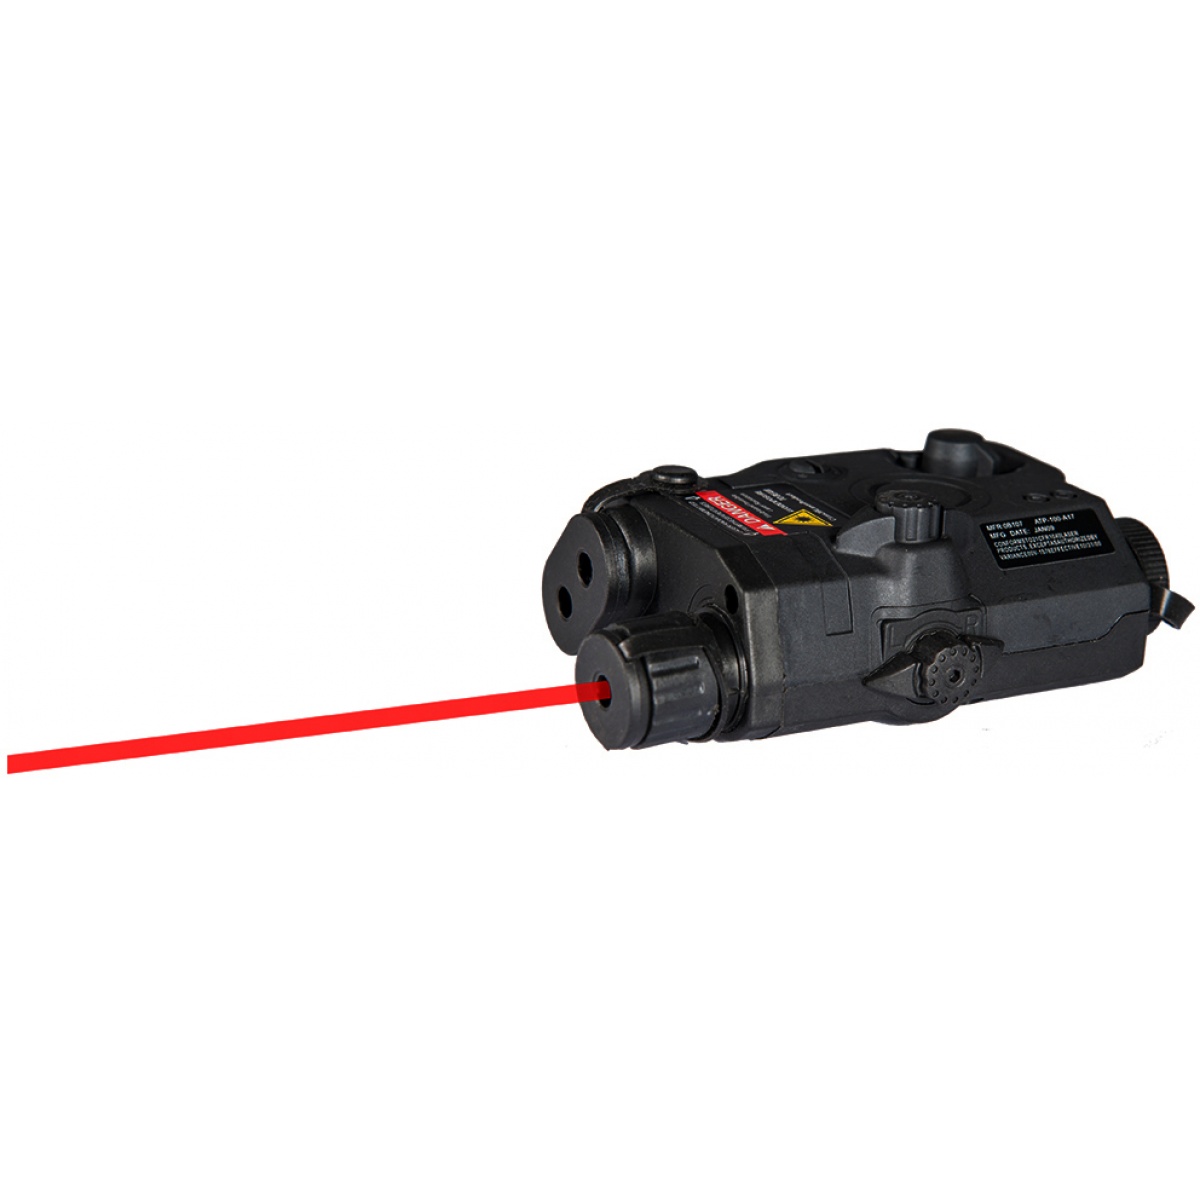 LA-PEQ15 Red Laser / LED Light (175 Lumen ) Aiming Device